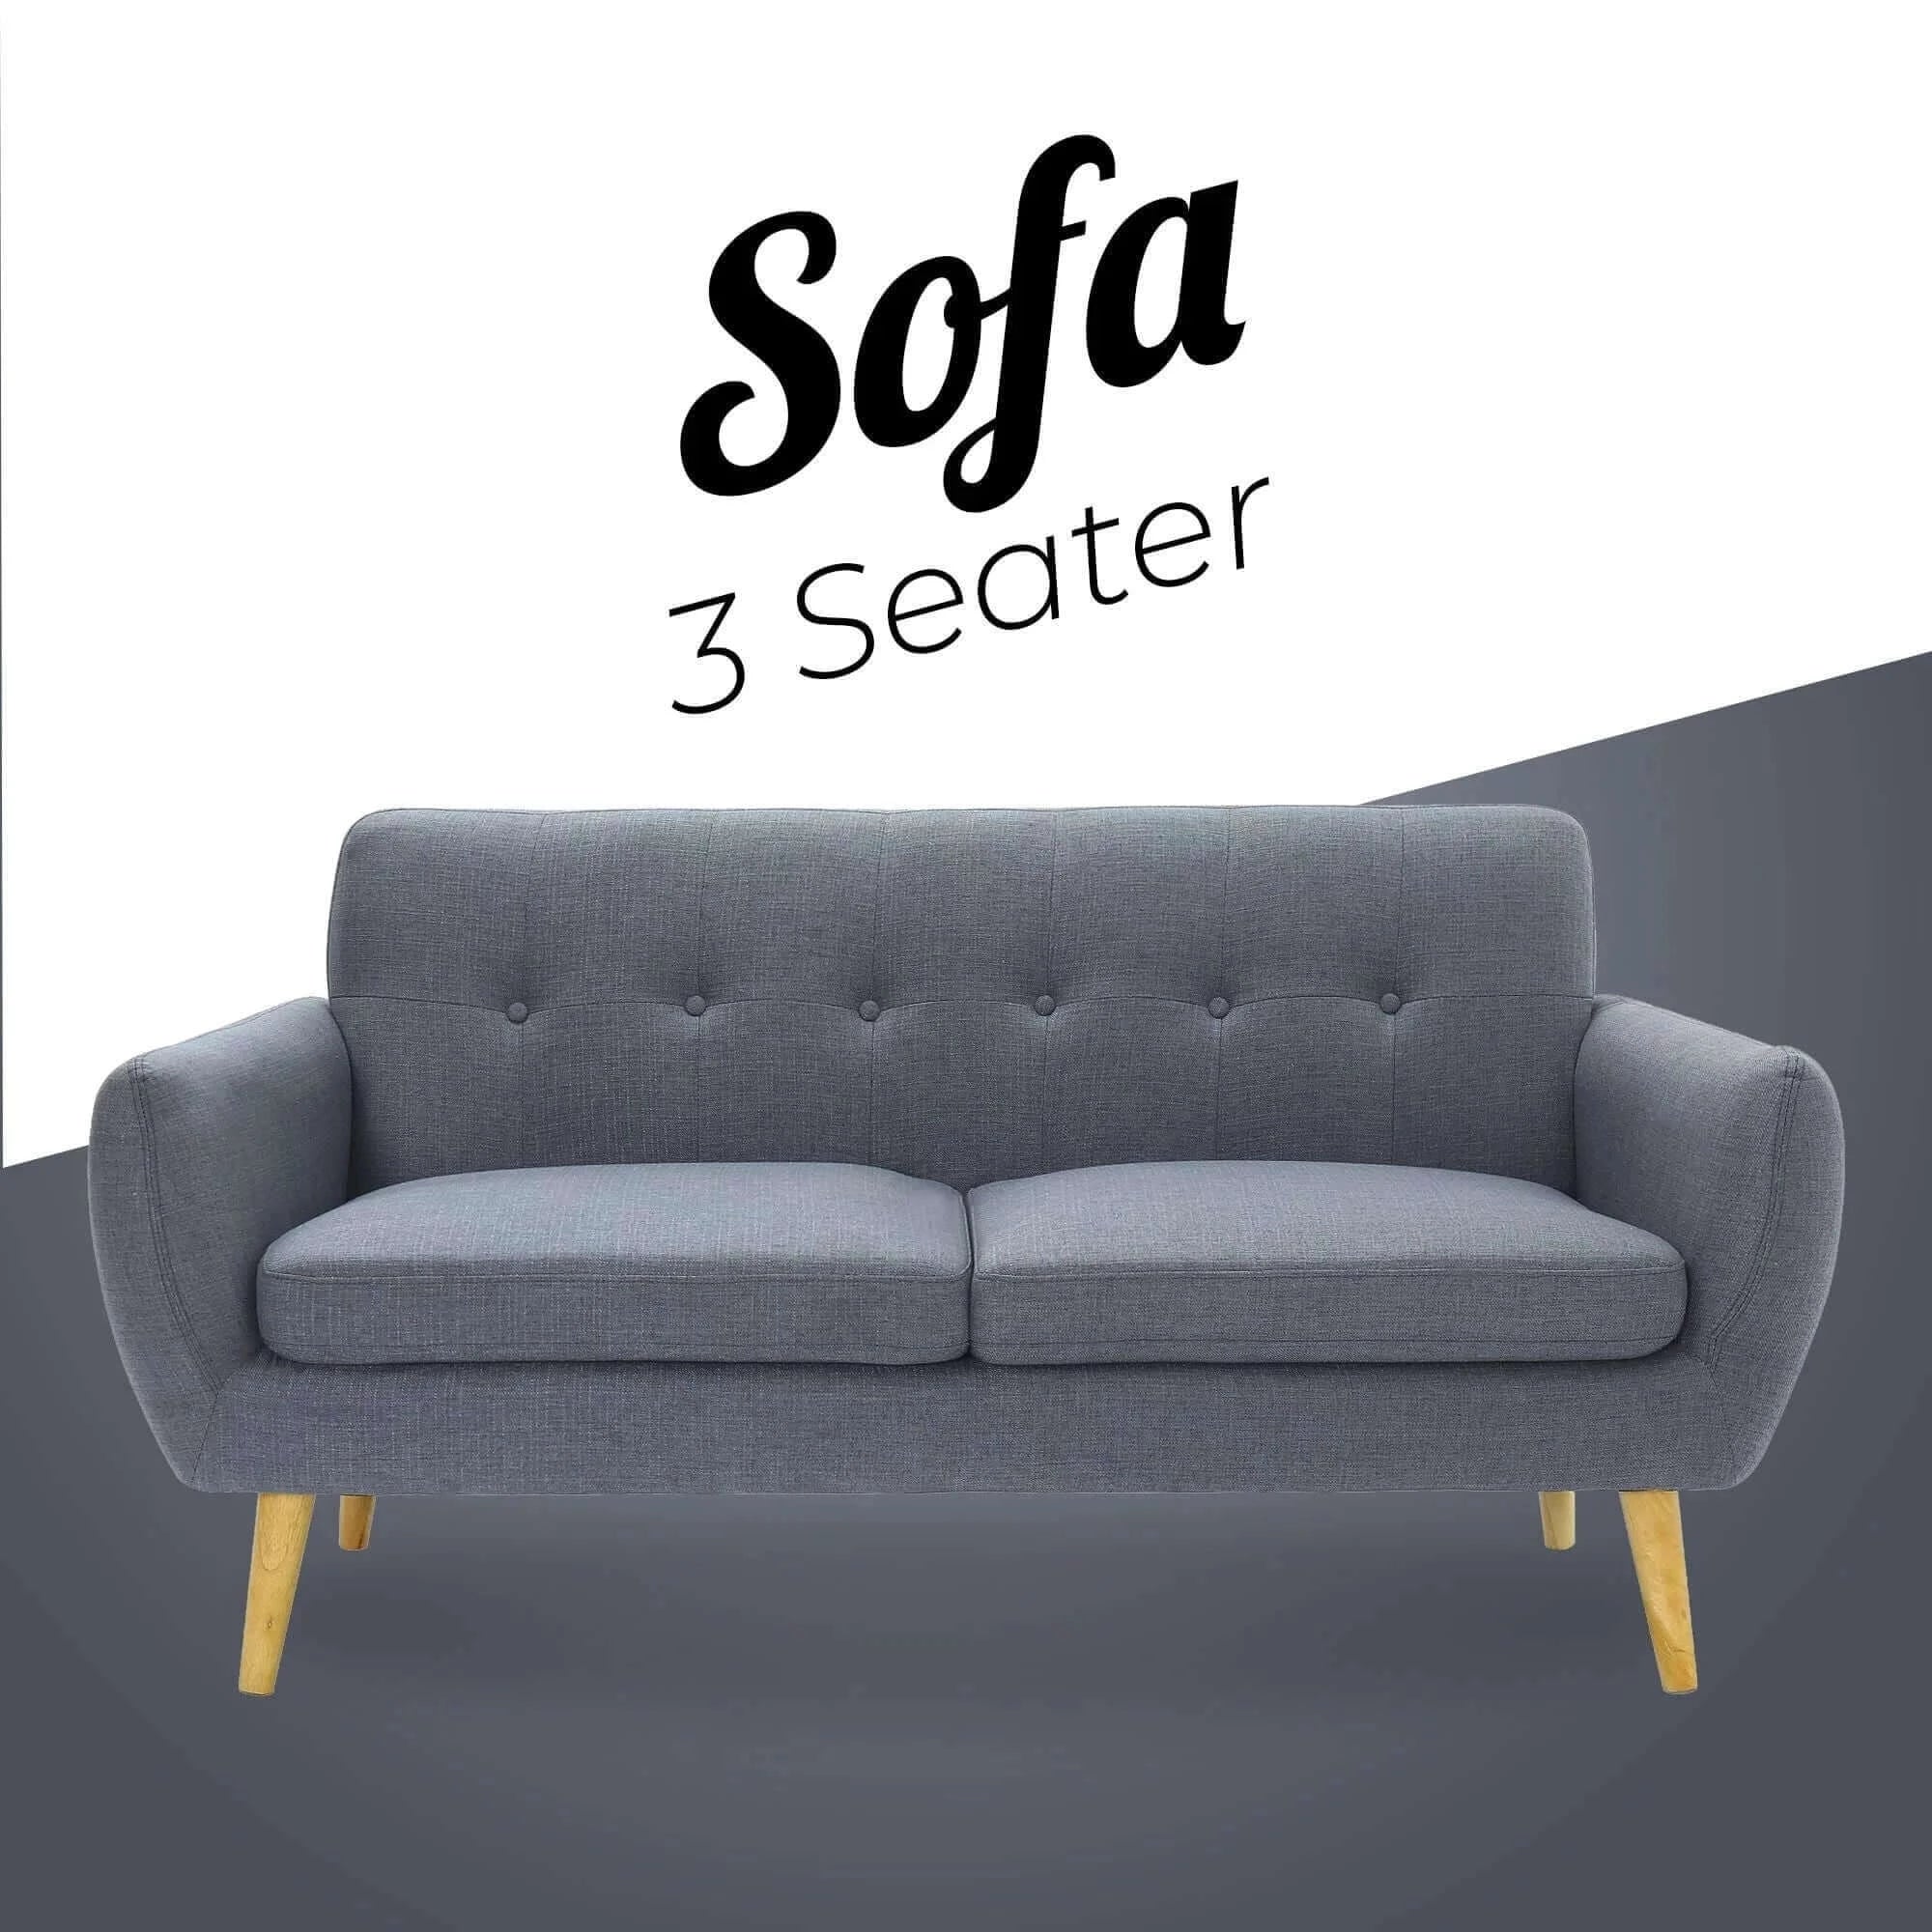 Buy dane 3 + 1 seater fabric upholstered sofa armchair lounge couch - dark grey - upinteriors-Upinteriors